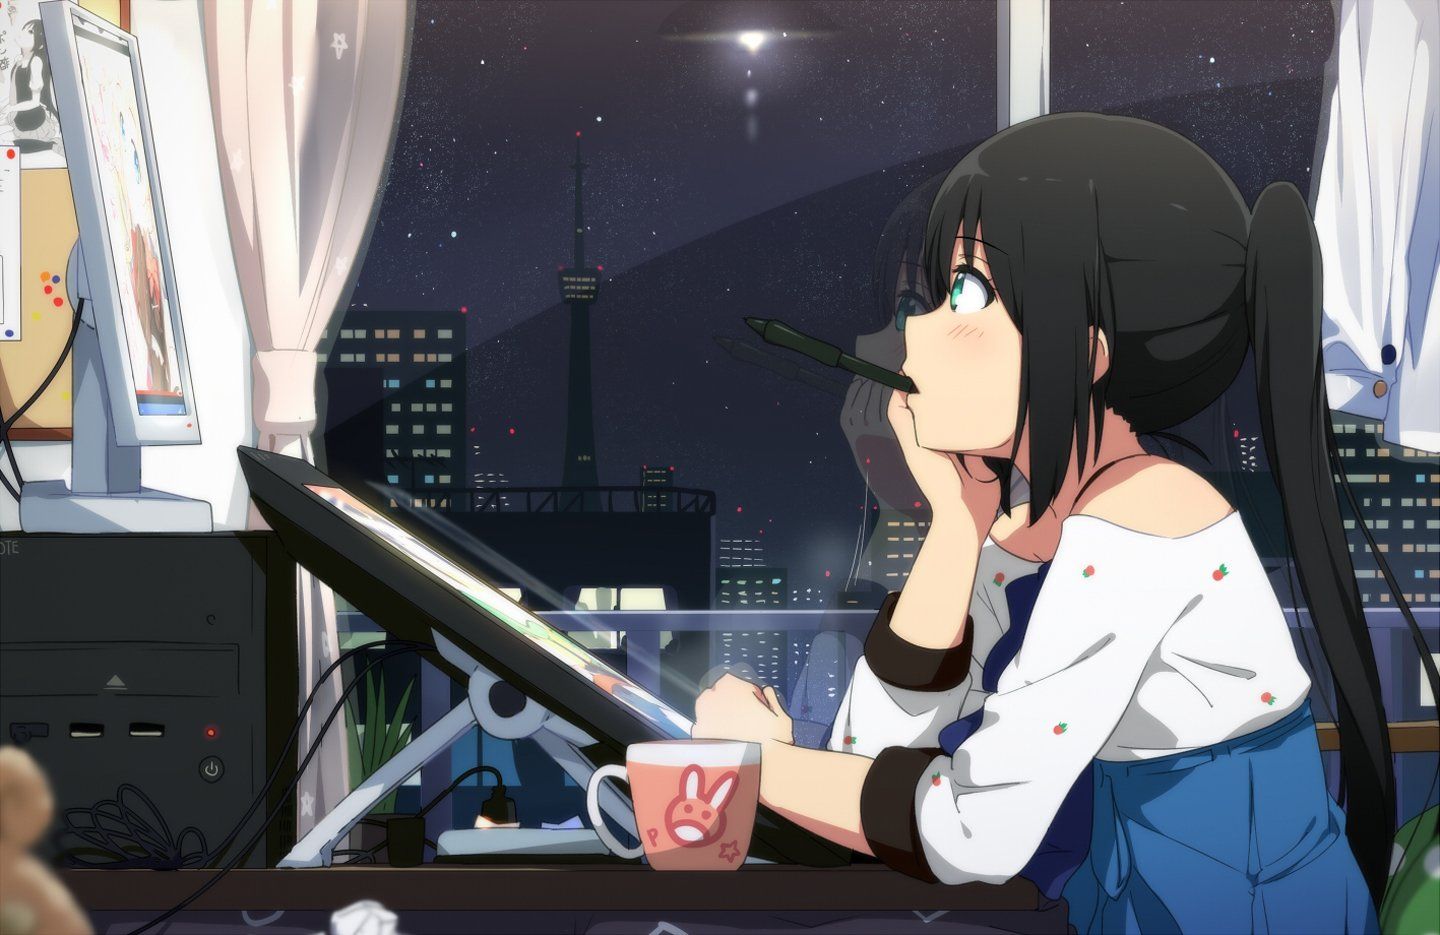 Wallpaper, 1440x935 px, a, anime, Break, girl, taking, Tokyo, tower, watching 1440x935